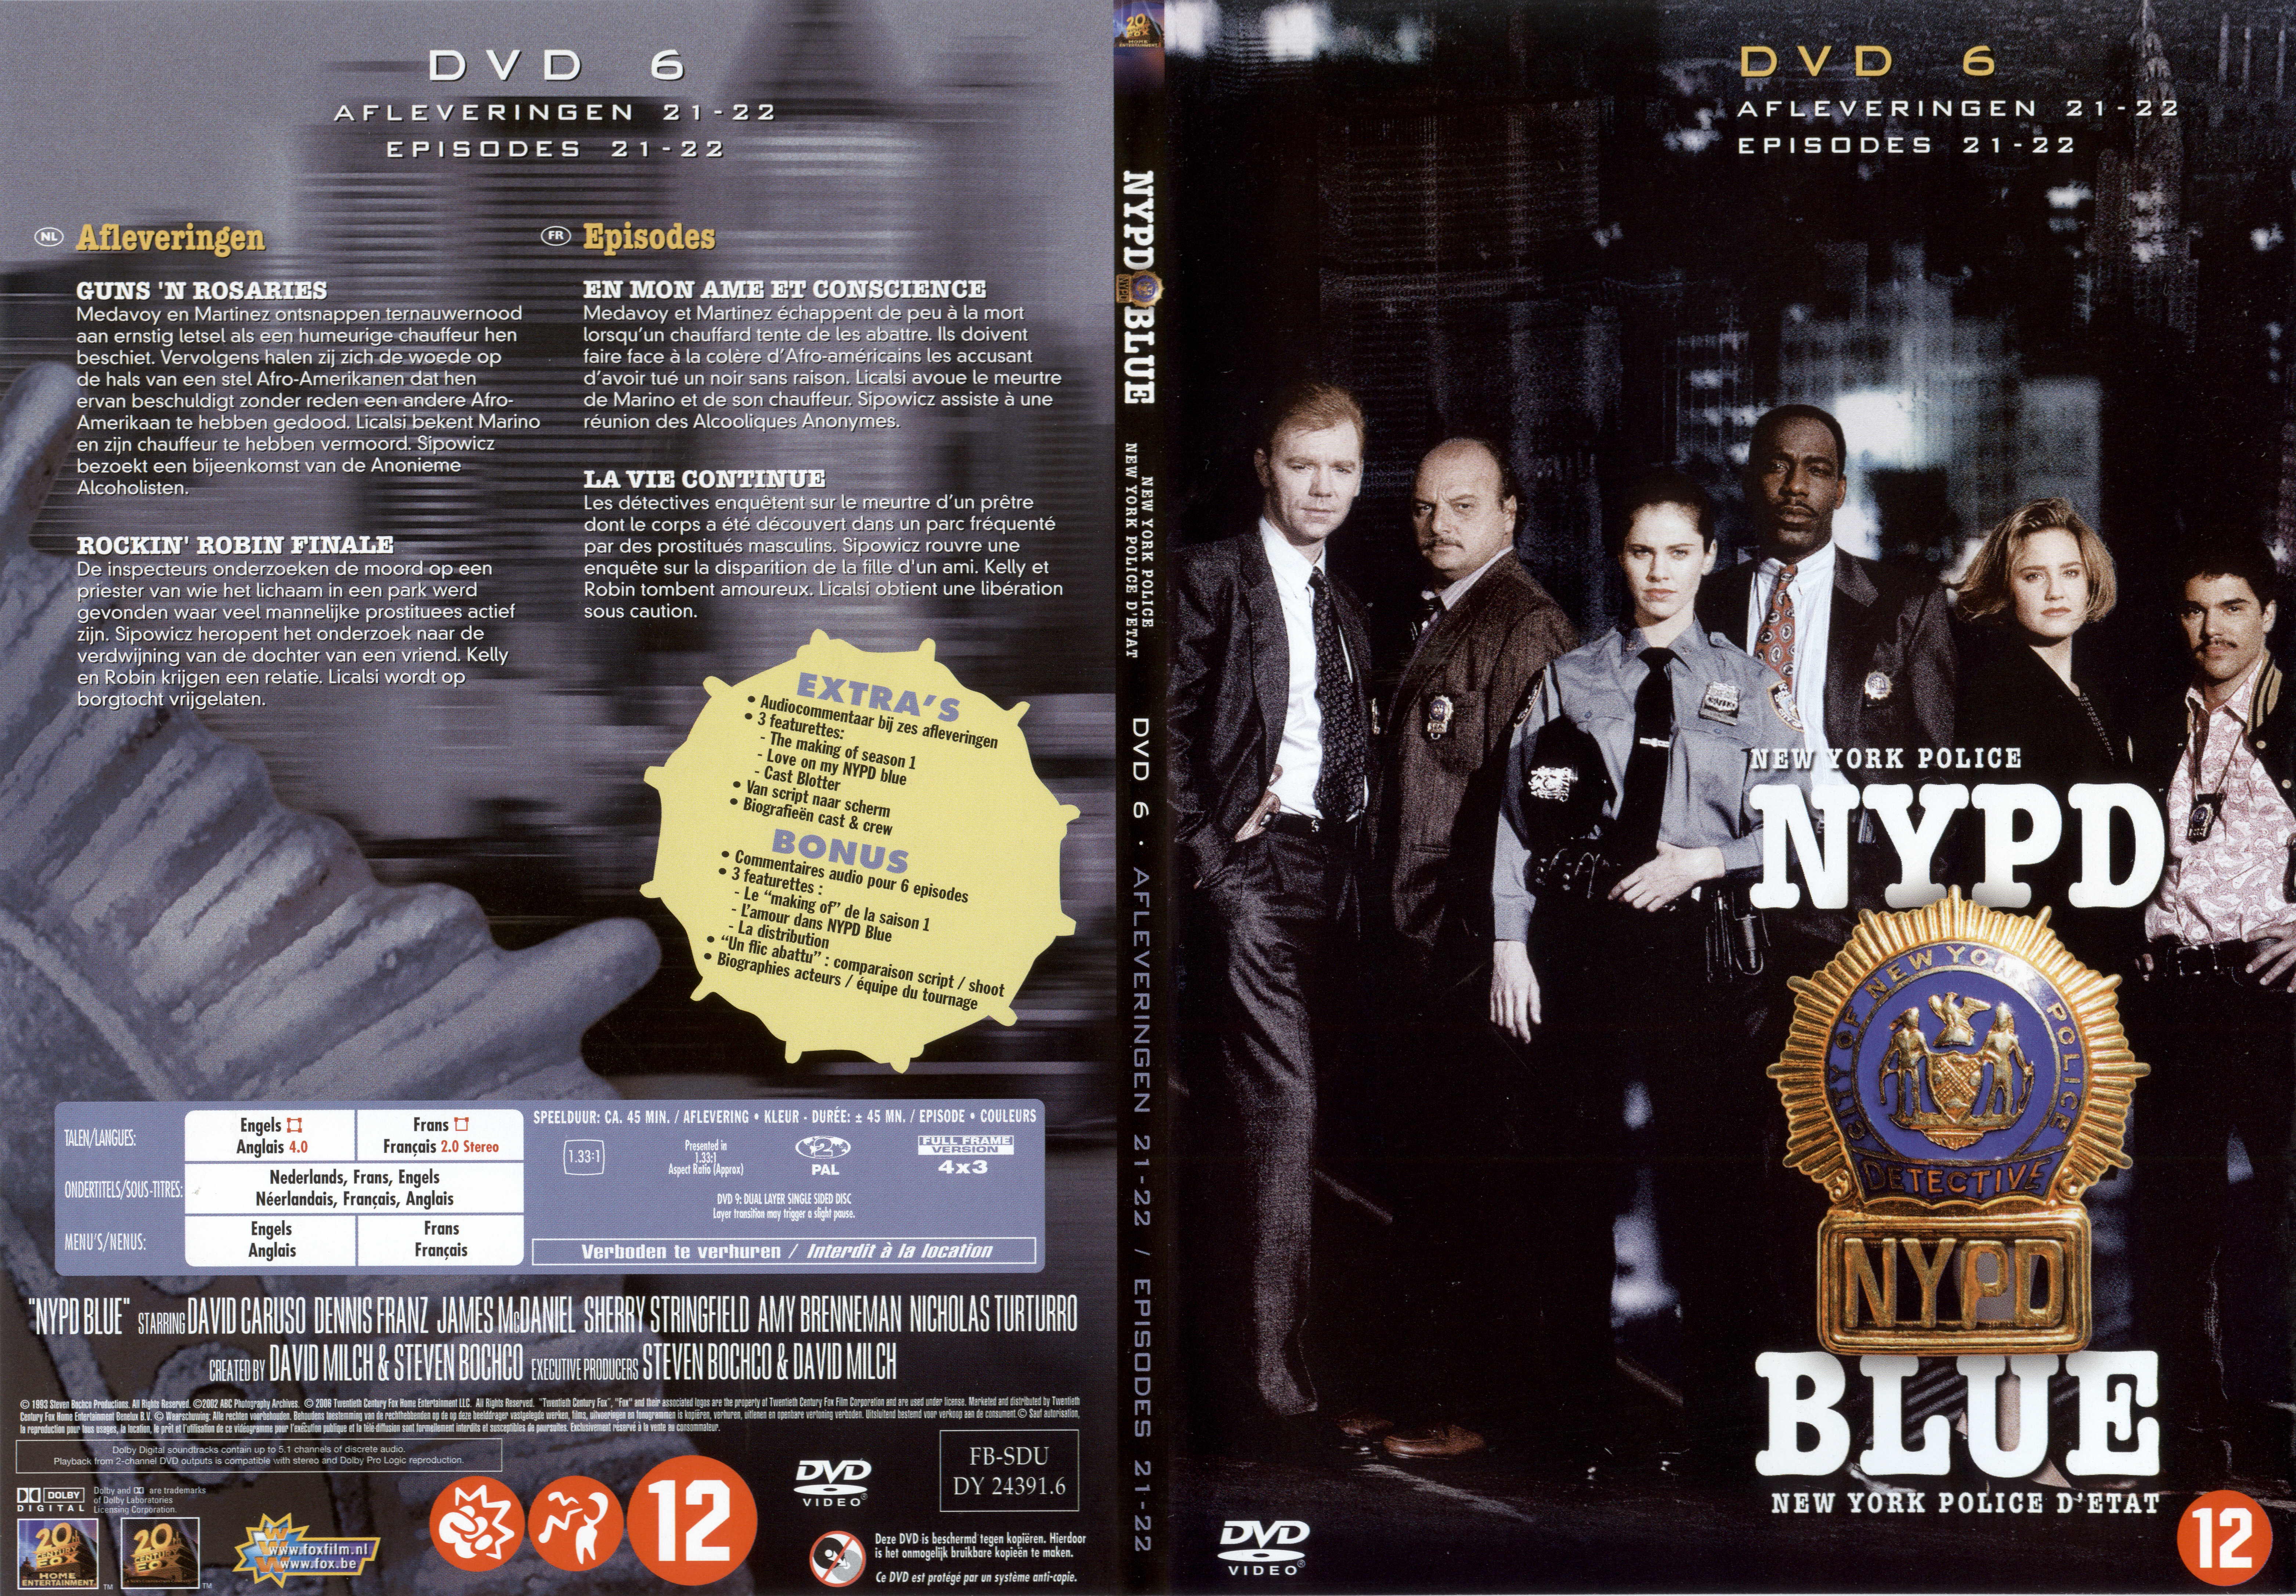 Jaquette DVD NYPD Blue saison 01 dvd 06 v2